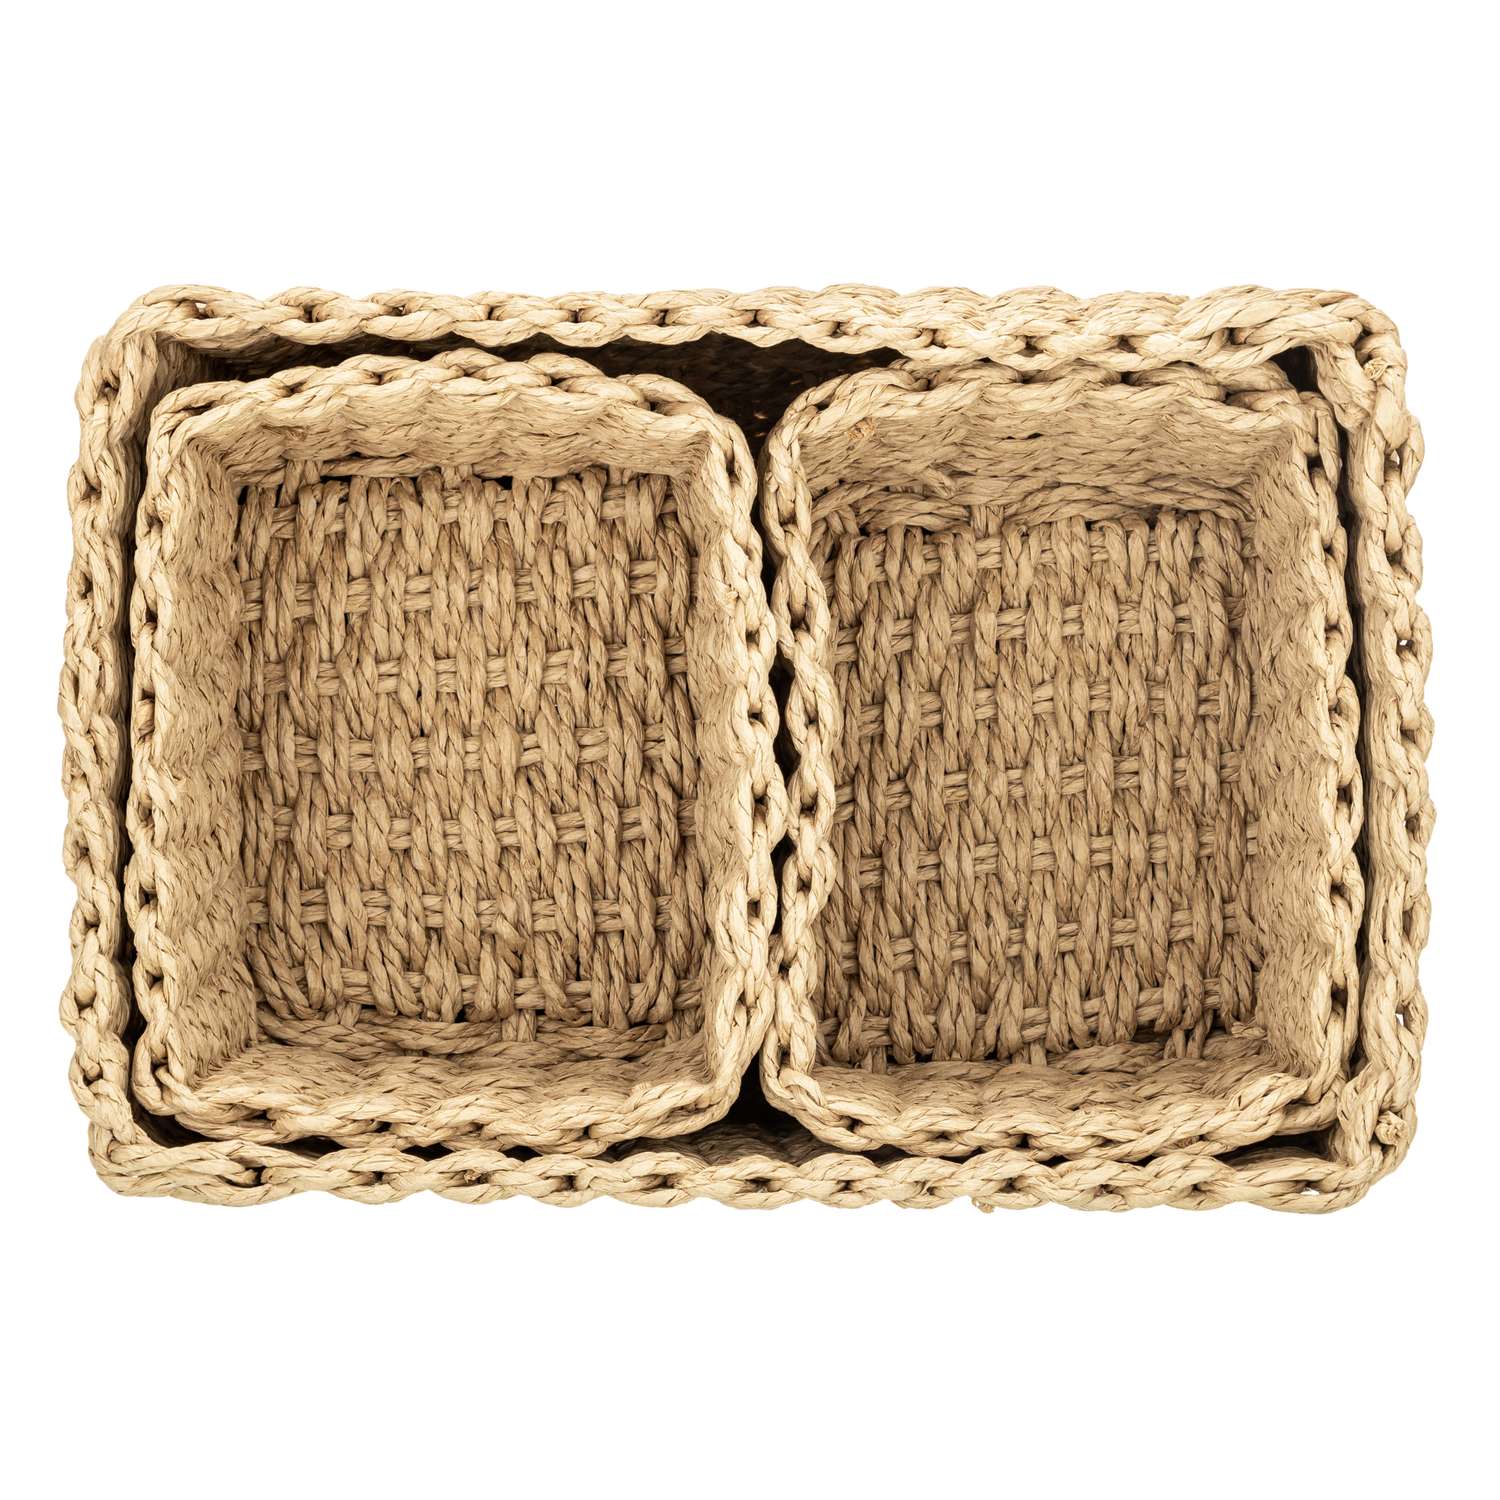 Набор плетеных корзинок El Casa 3 шт соломенный 1 корзина – 28х22х14 см. 2 корзины – 18х14х11 см - фото 6